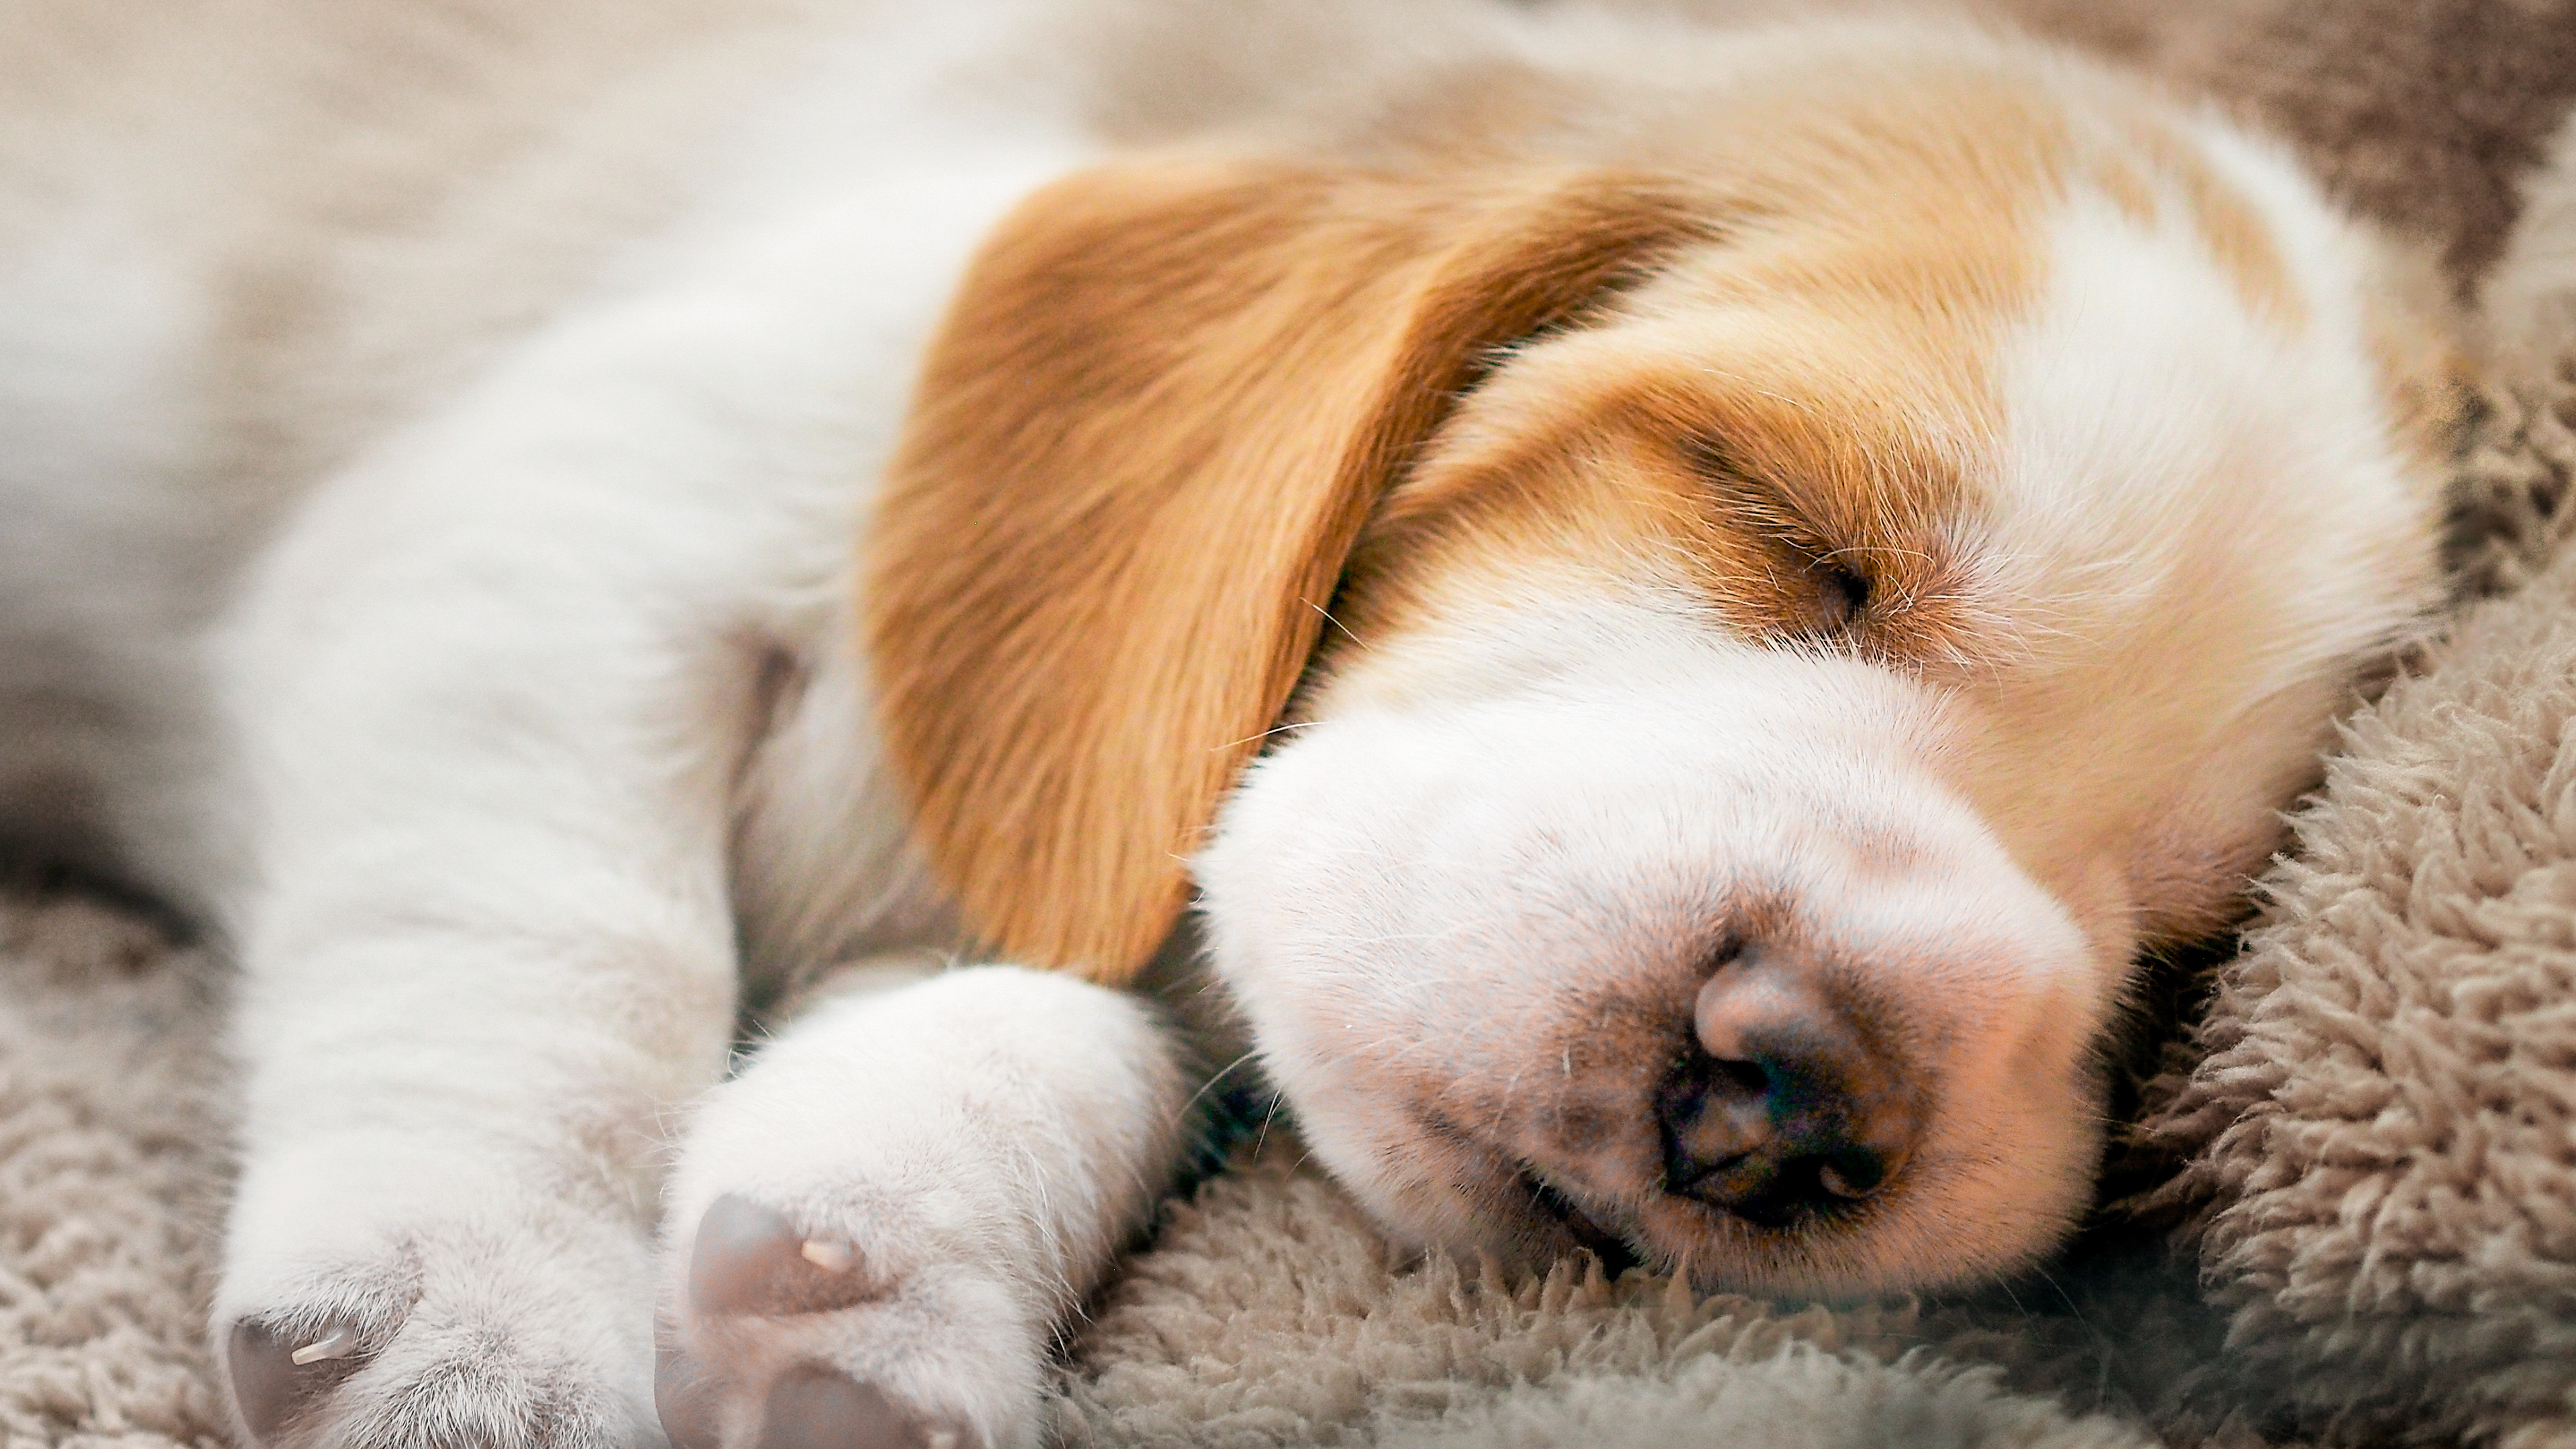 Beagle puppy sleeping on a soft blanket